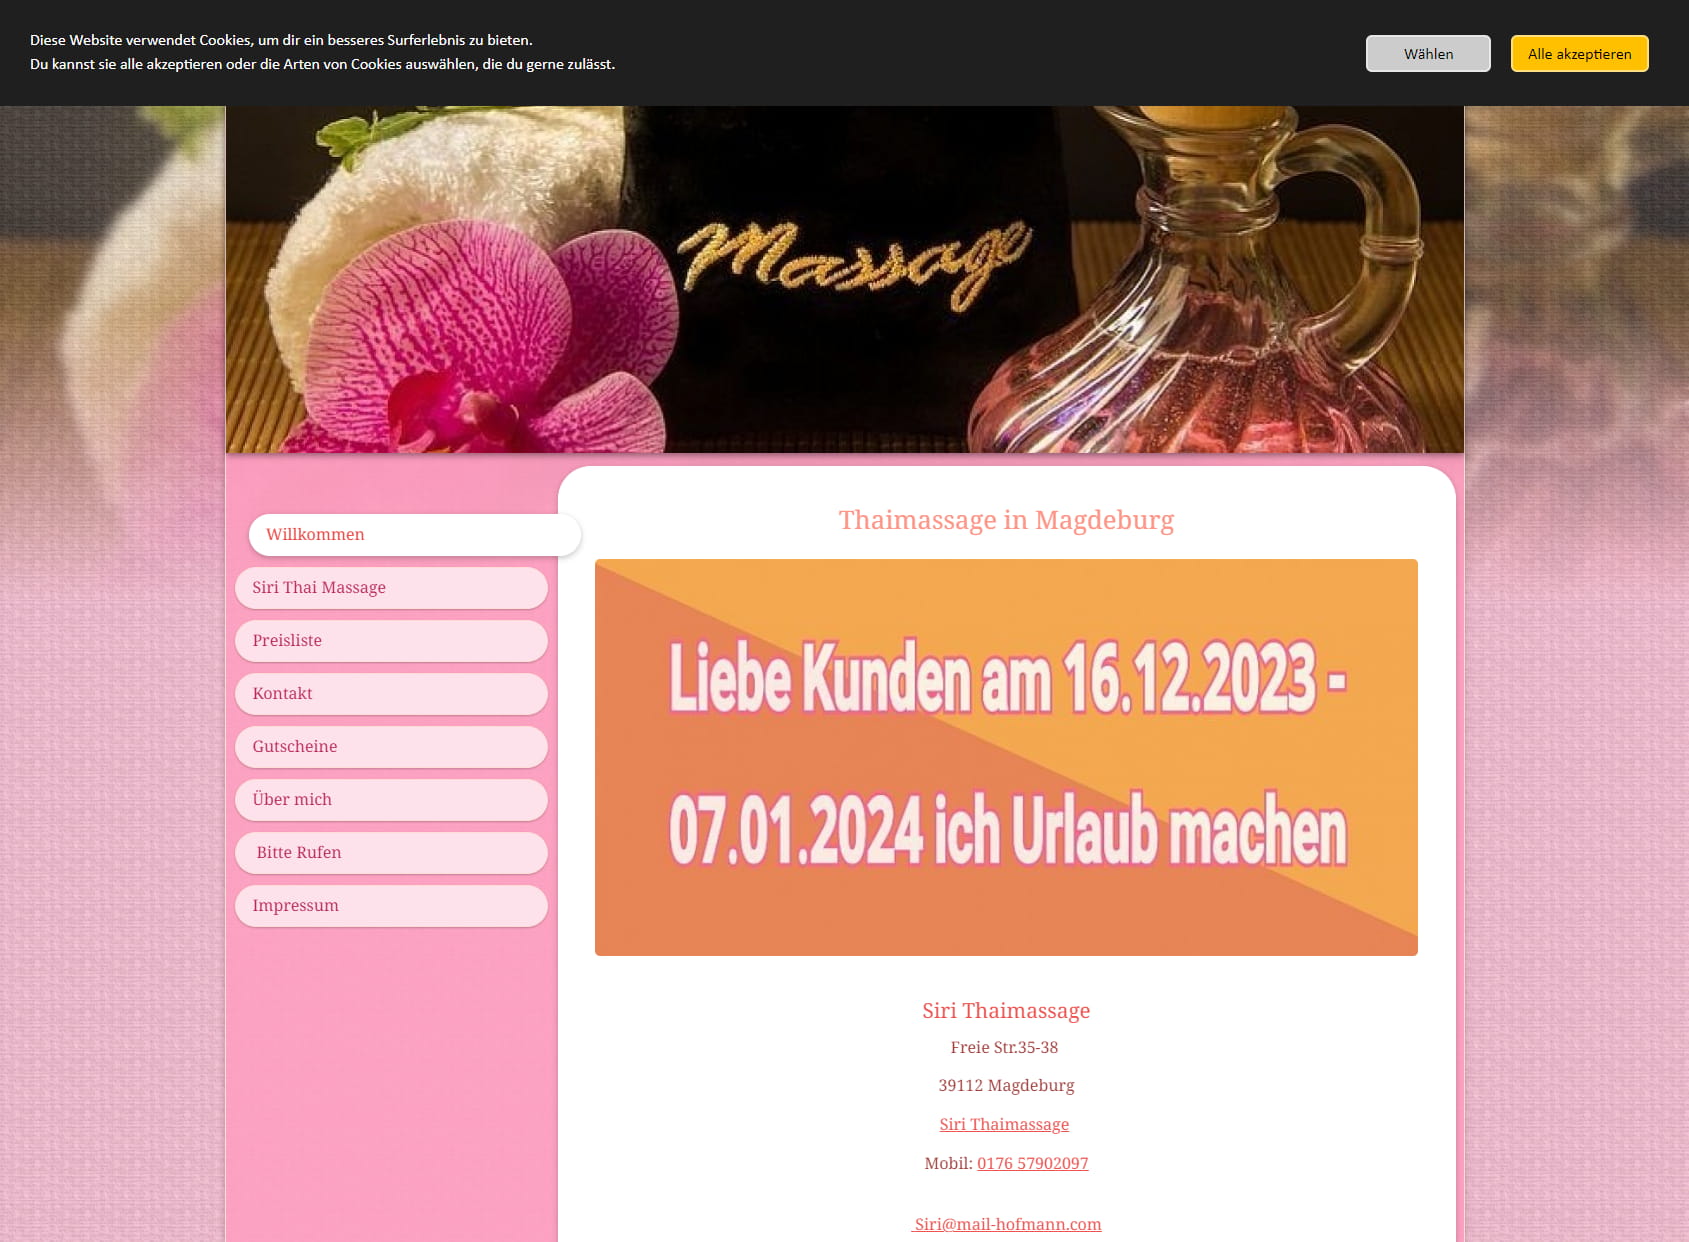 Siri Thai Massage in Magdeburg